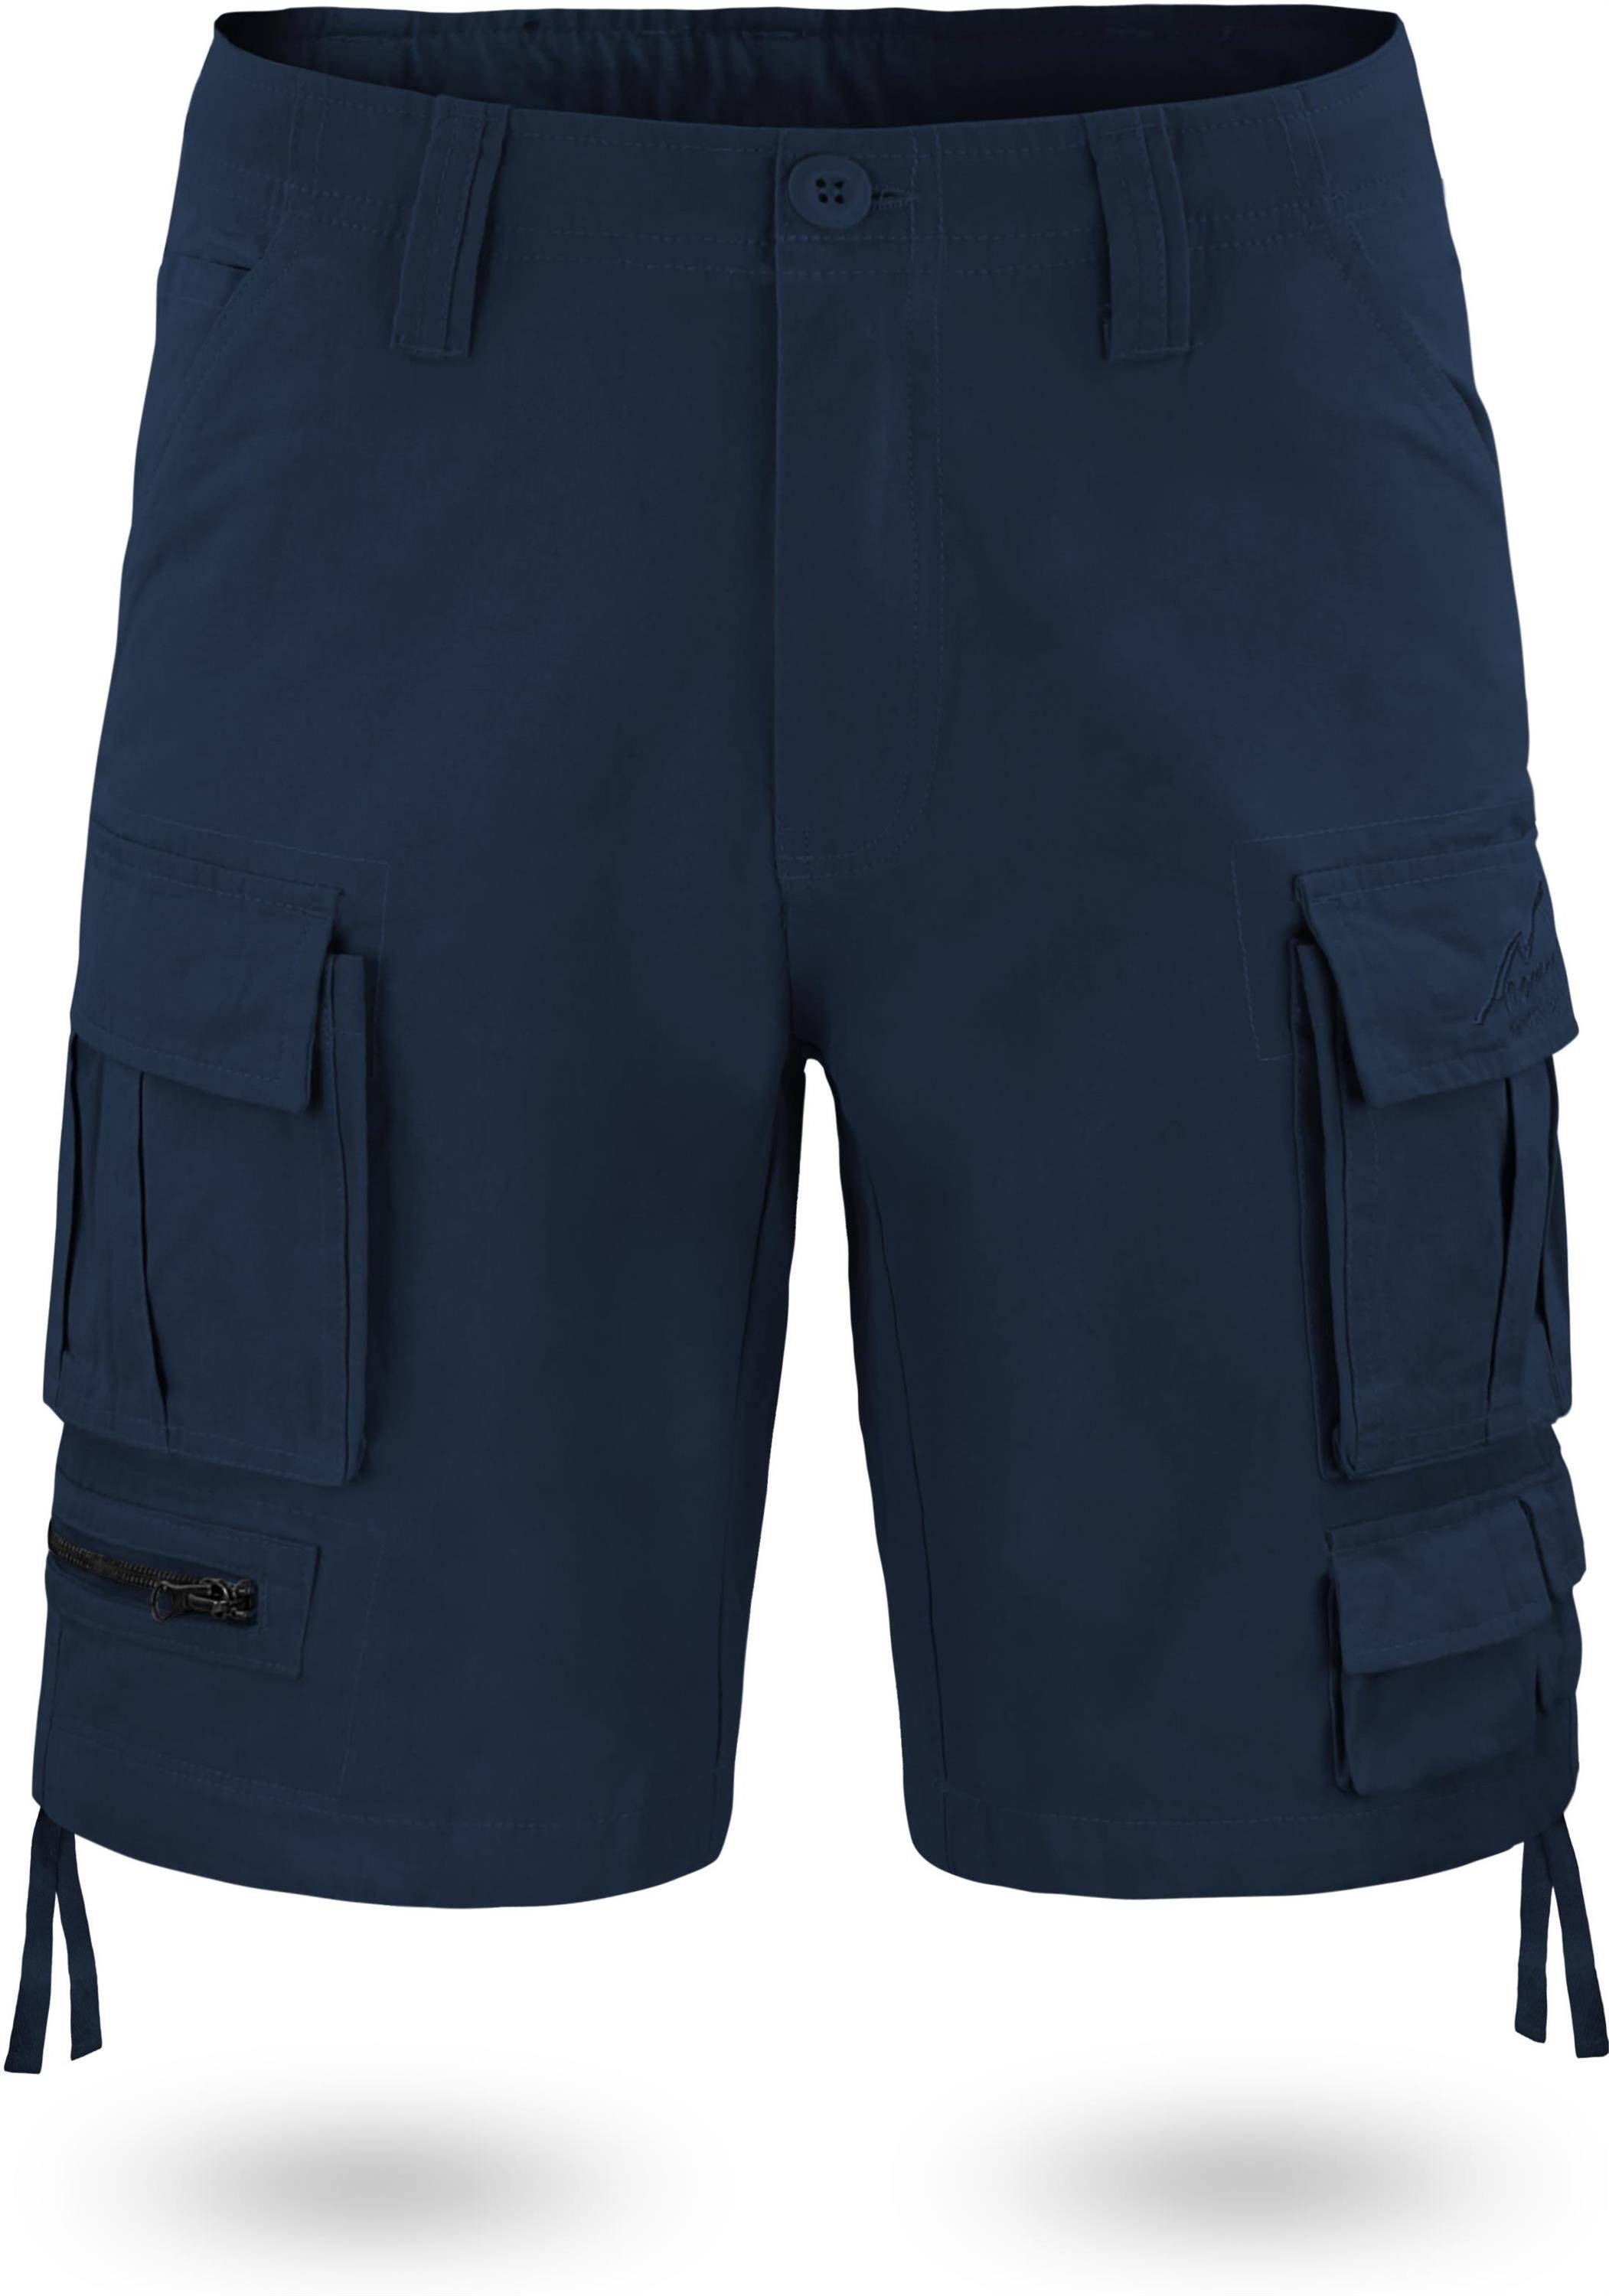 normani Bermudas Herren Shorts Atacama Vintage Shorts kurze Sommershorts Cargoshorts aus 100% Bio-Baumwolle Navy